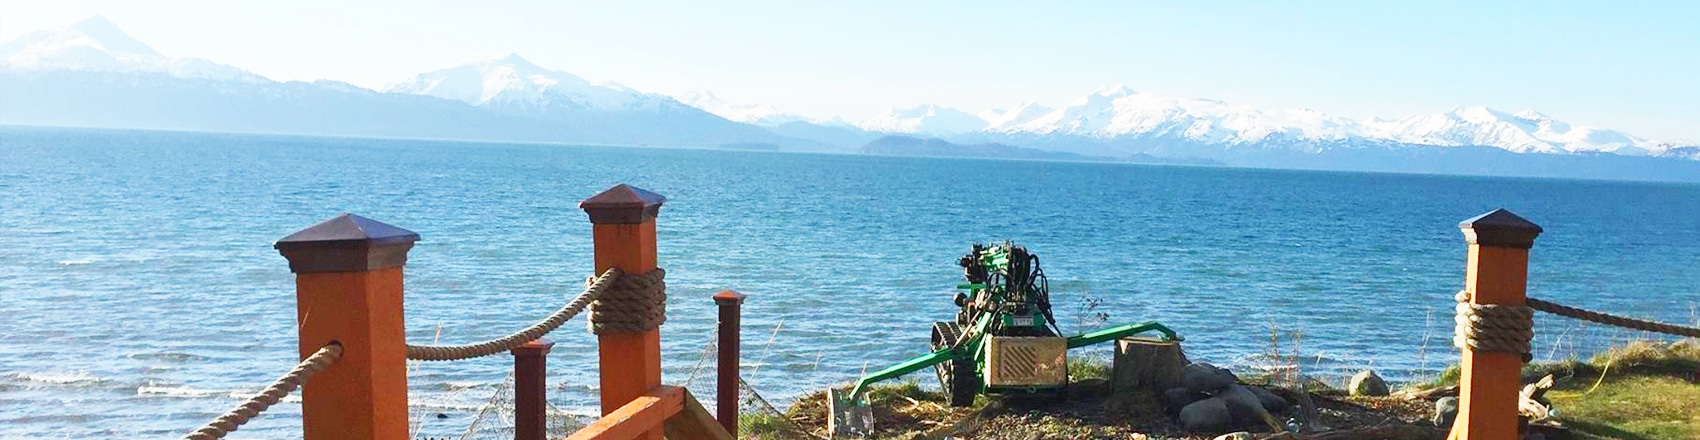 Installing a dock along the Alaskan coastline.